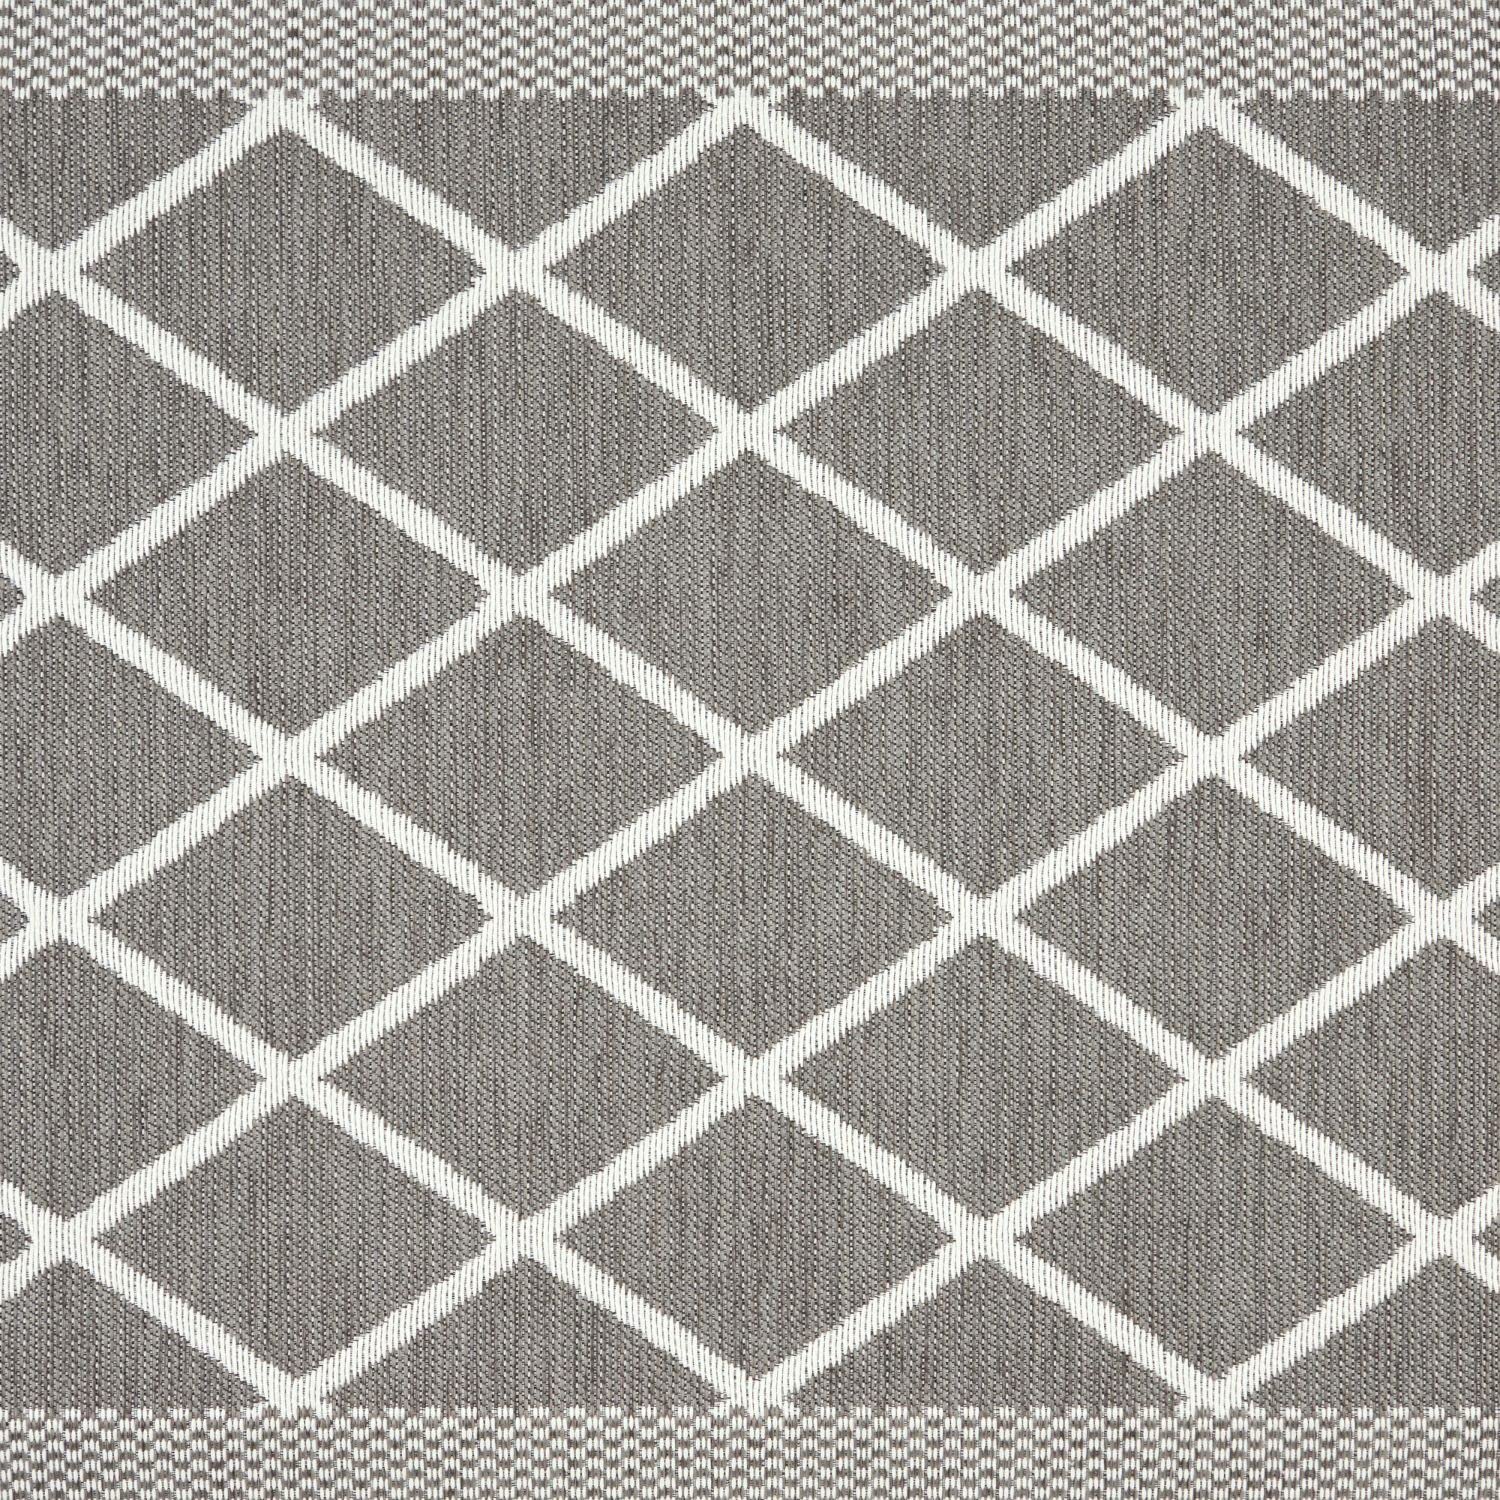 Martha Stewart Miles Modern Diamond Anti-Fatigue Air-Infused Kitchen Mat, Grey, 19.6